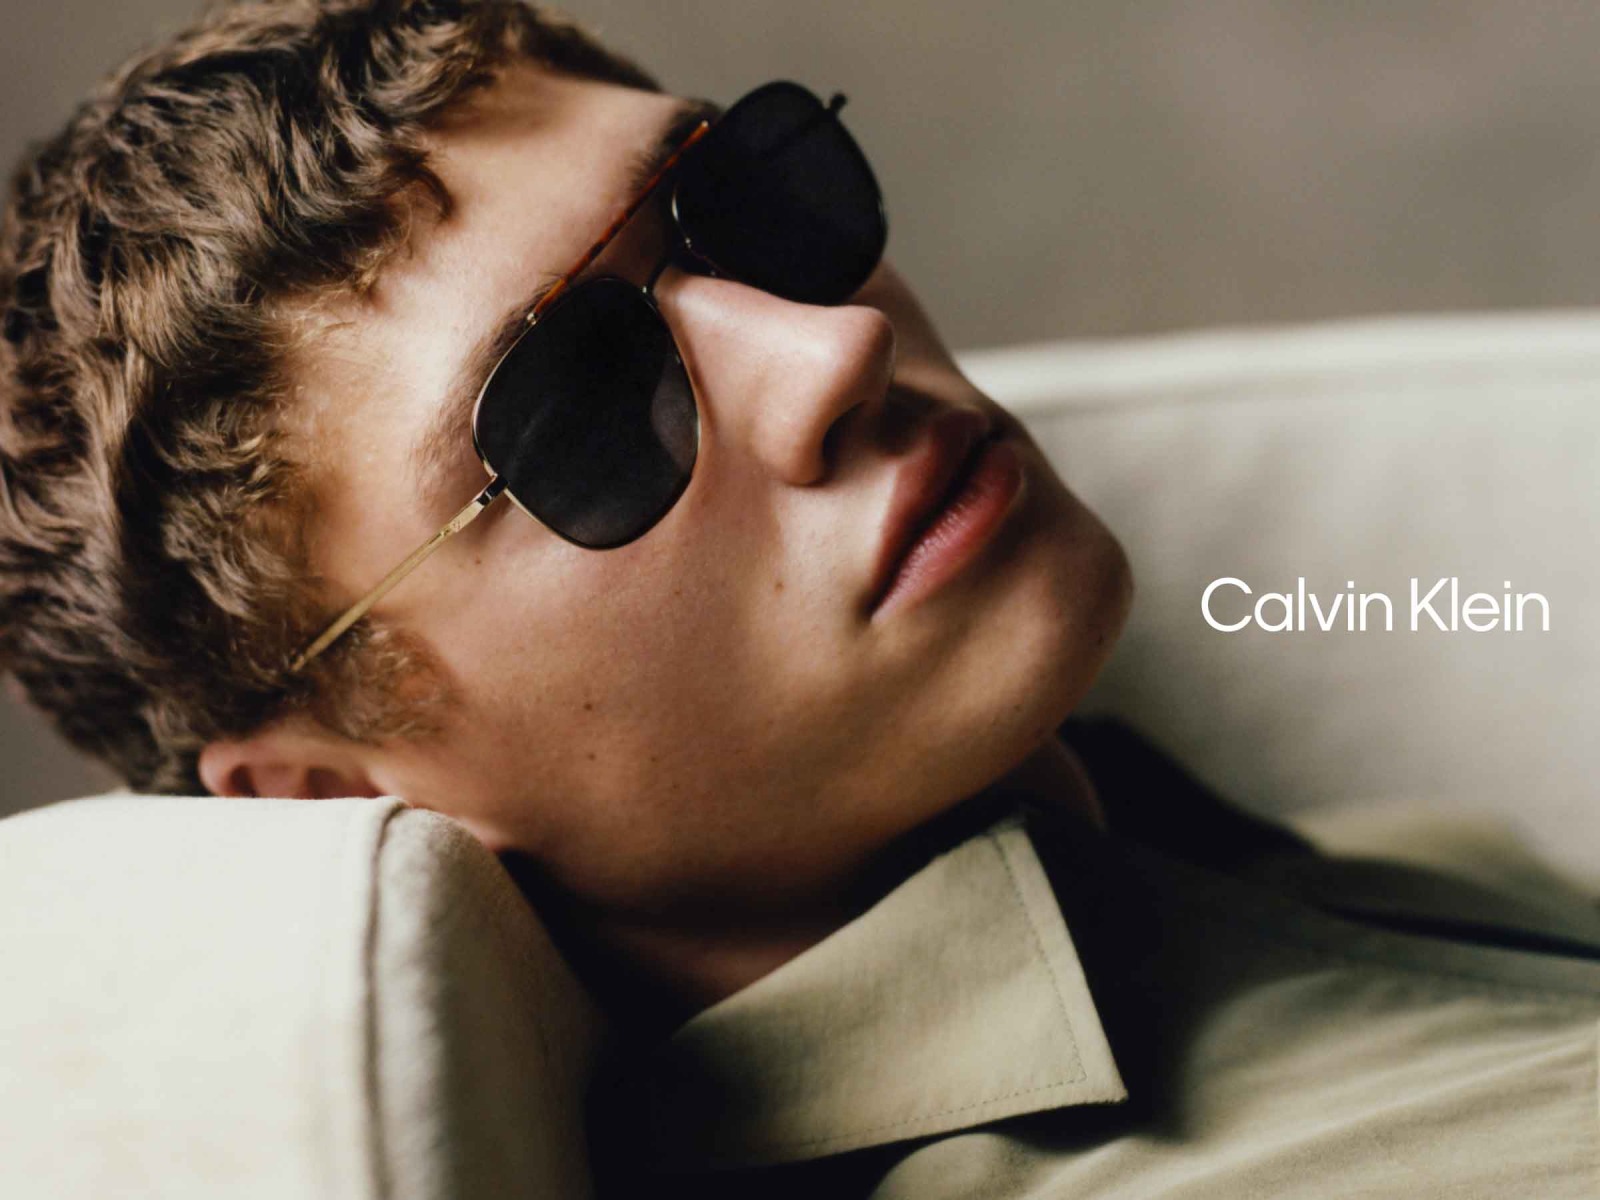 Calvin Klein 7 by Paul Maximilian SCHLOSSER